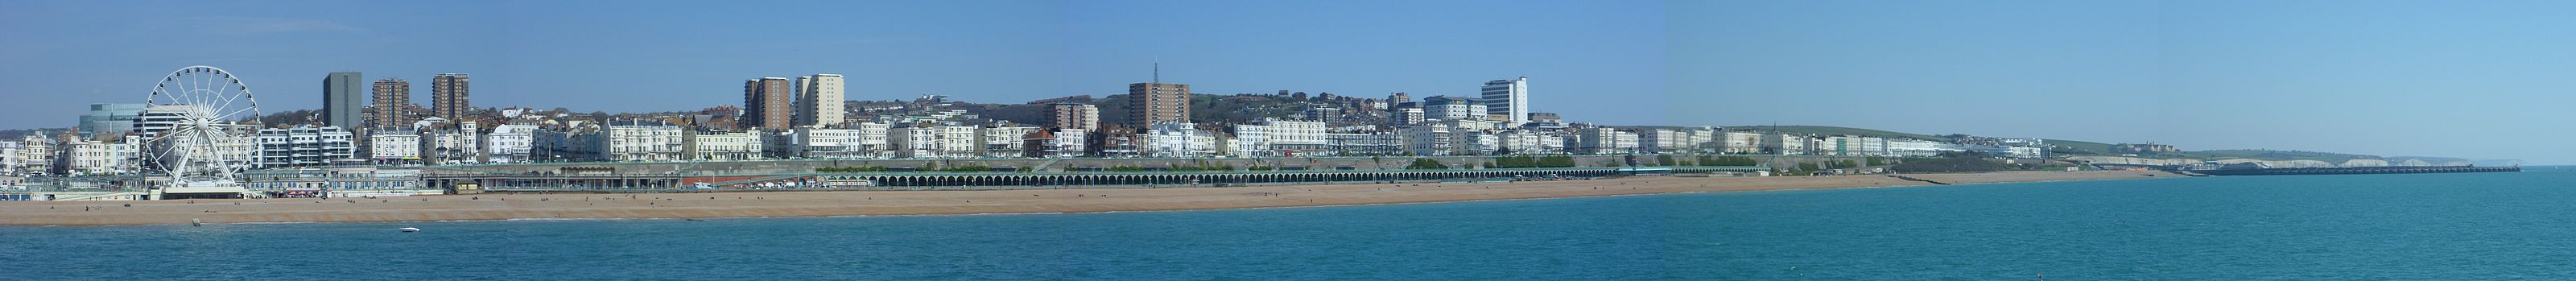 Brighton tengerparti képe